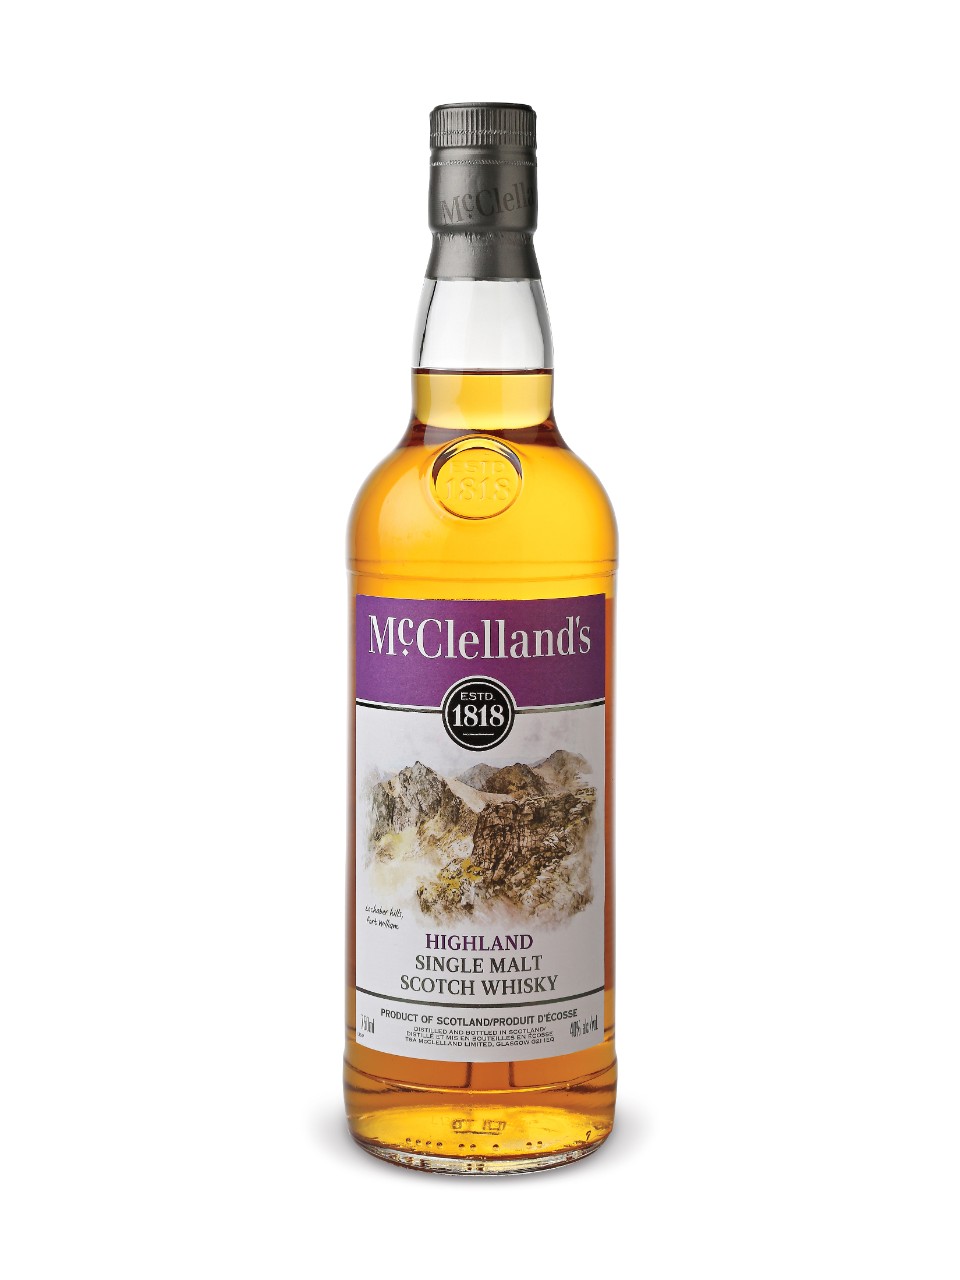 Mcclelland's Single Malt Highland Scotch